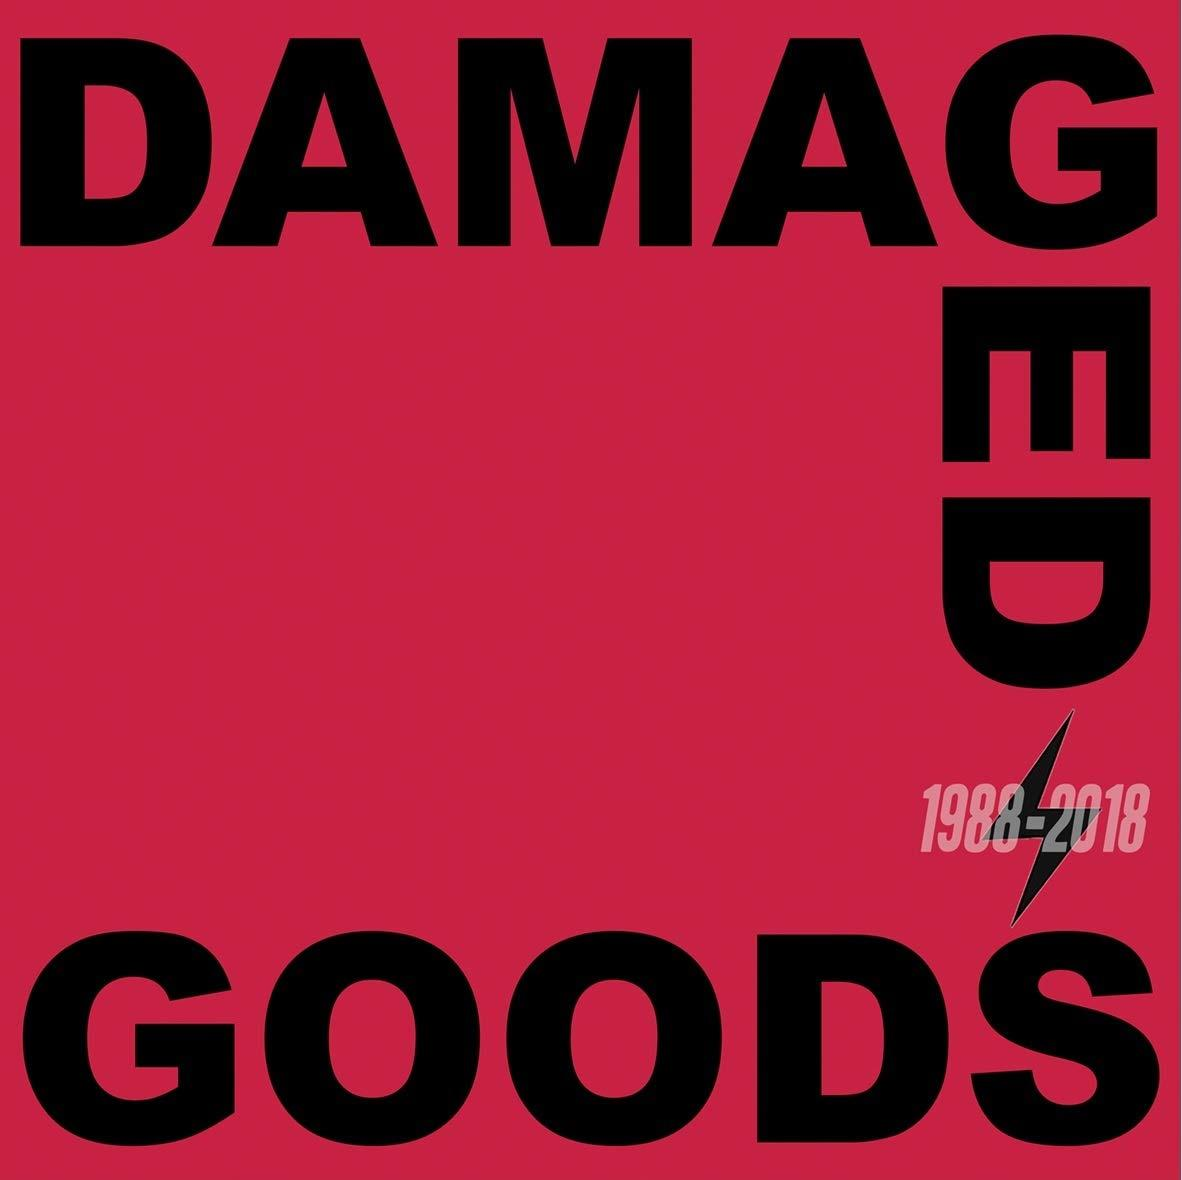 (Vinyl) Goods VARIOUS 1988-2018 Damaged - -